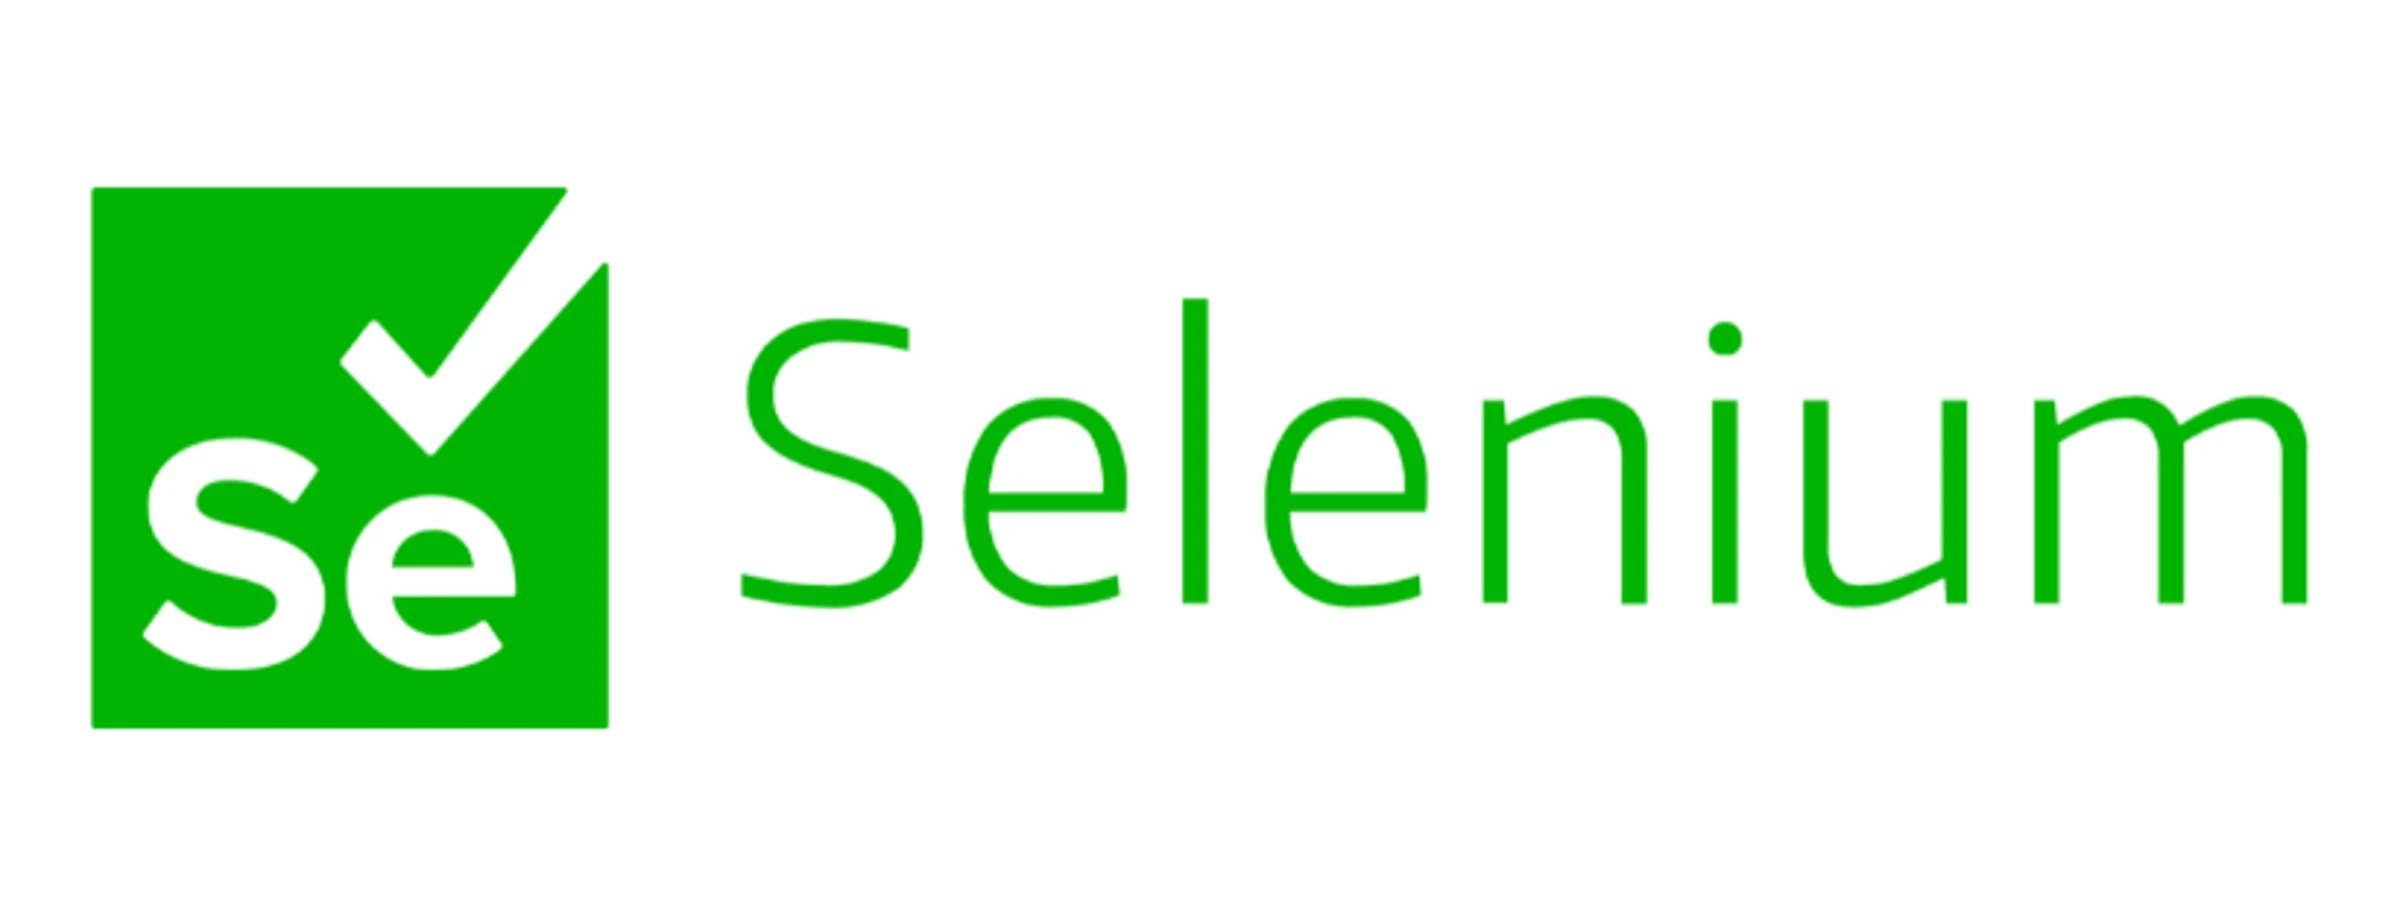 selenium_logo.webp